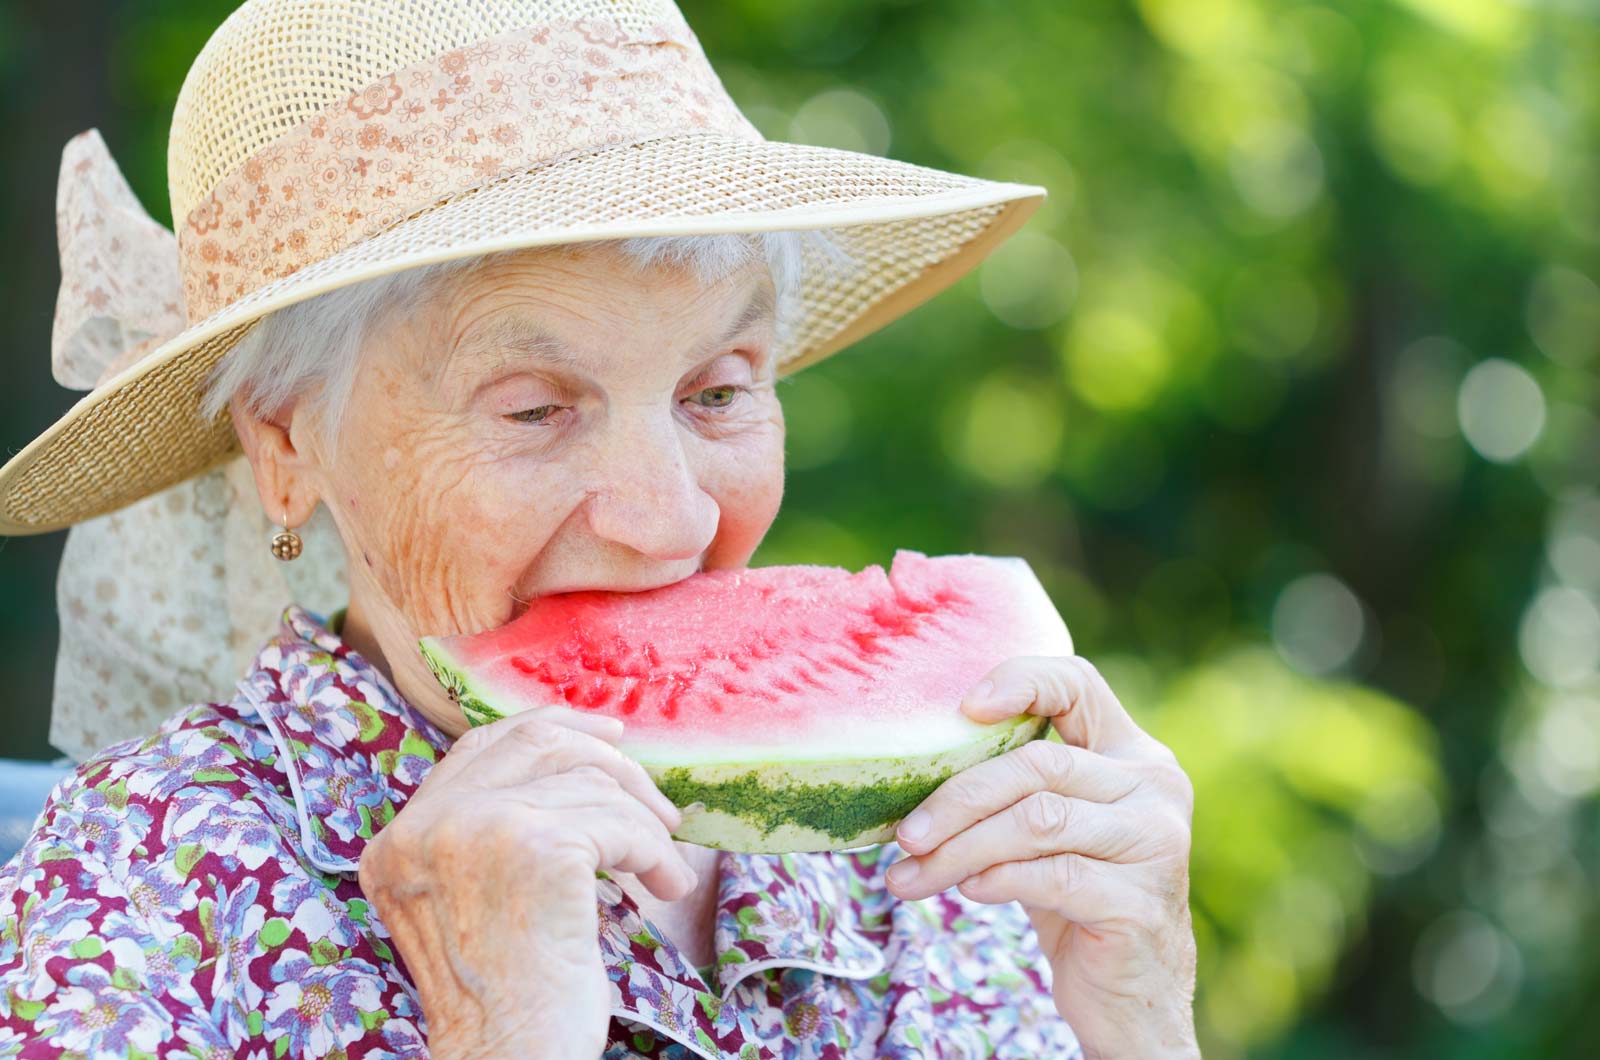 vrs garneau hall blog 6 summer safety tups for seniors living in retirement communities